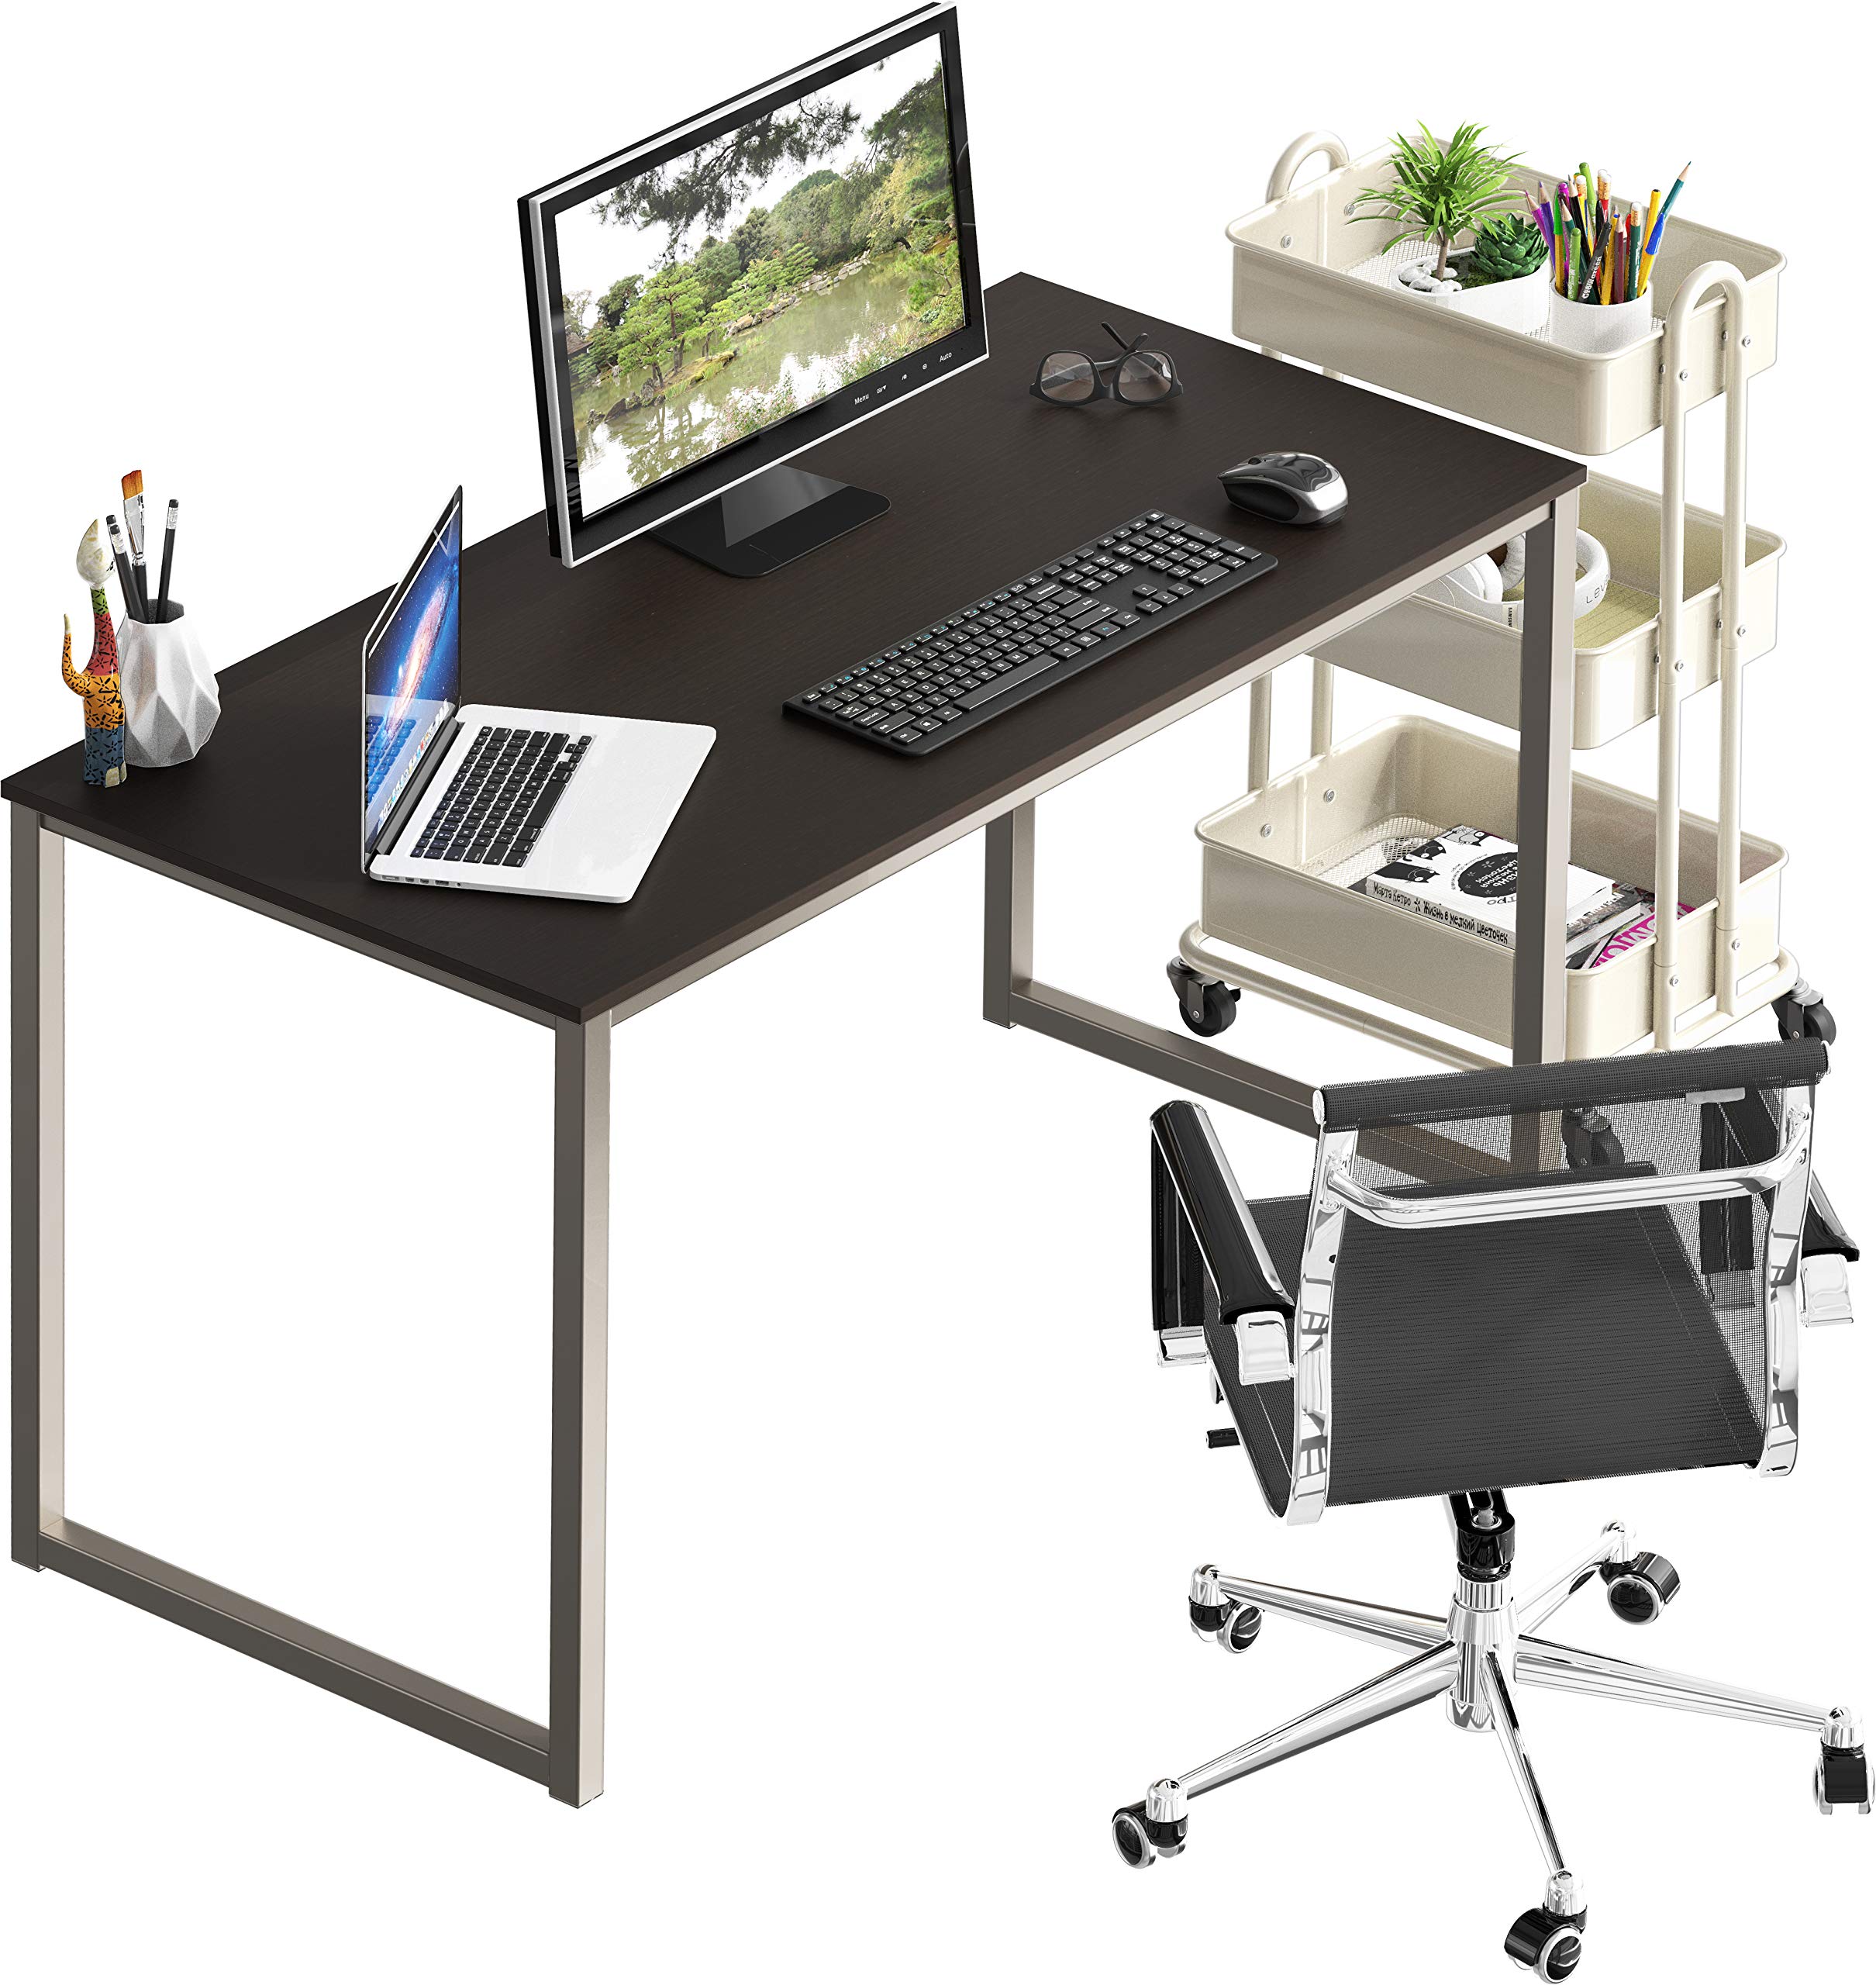 Mission 40 inches office desk, Espresso - image 2 of 5